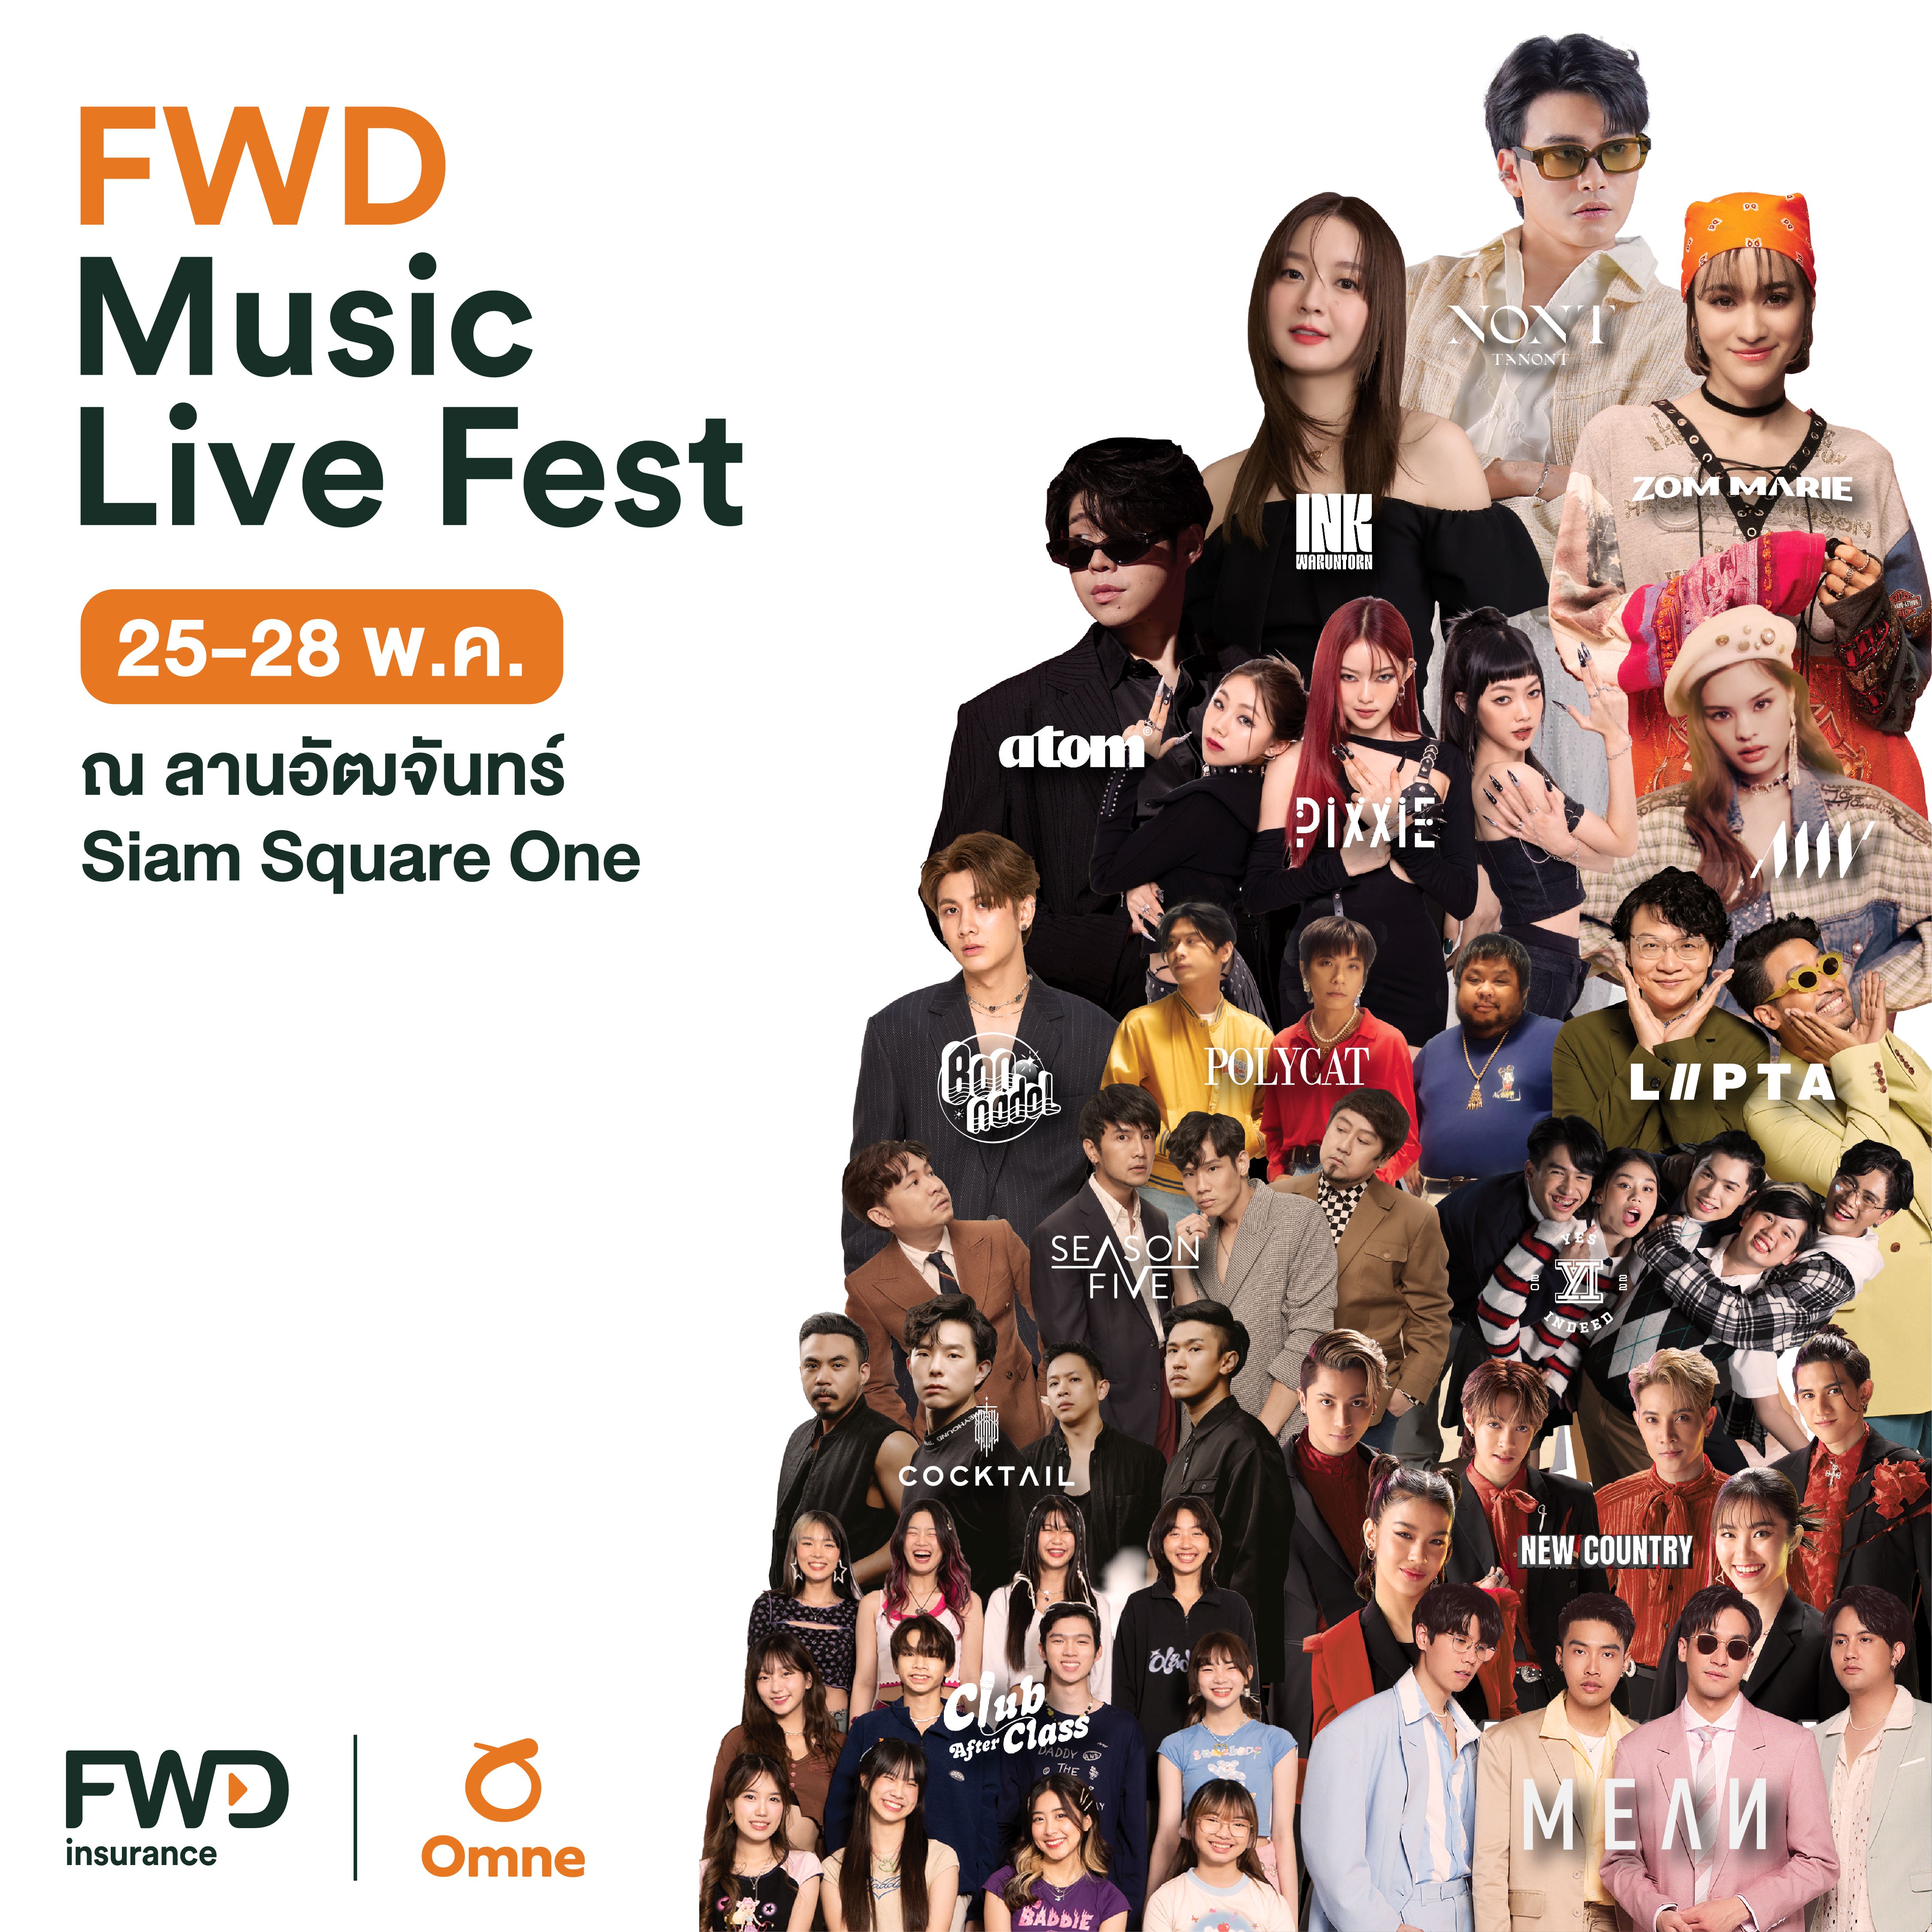 FWD ประกันชีวิต ลุยสร้าง Brand Experience ผ่าน Music ชวนทุกคนมาสนุก สร้างความสุข นำทัพศิลปินสุดฮอต บุกสยาม กับ “FWD Music Live Fest”